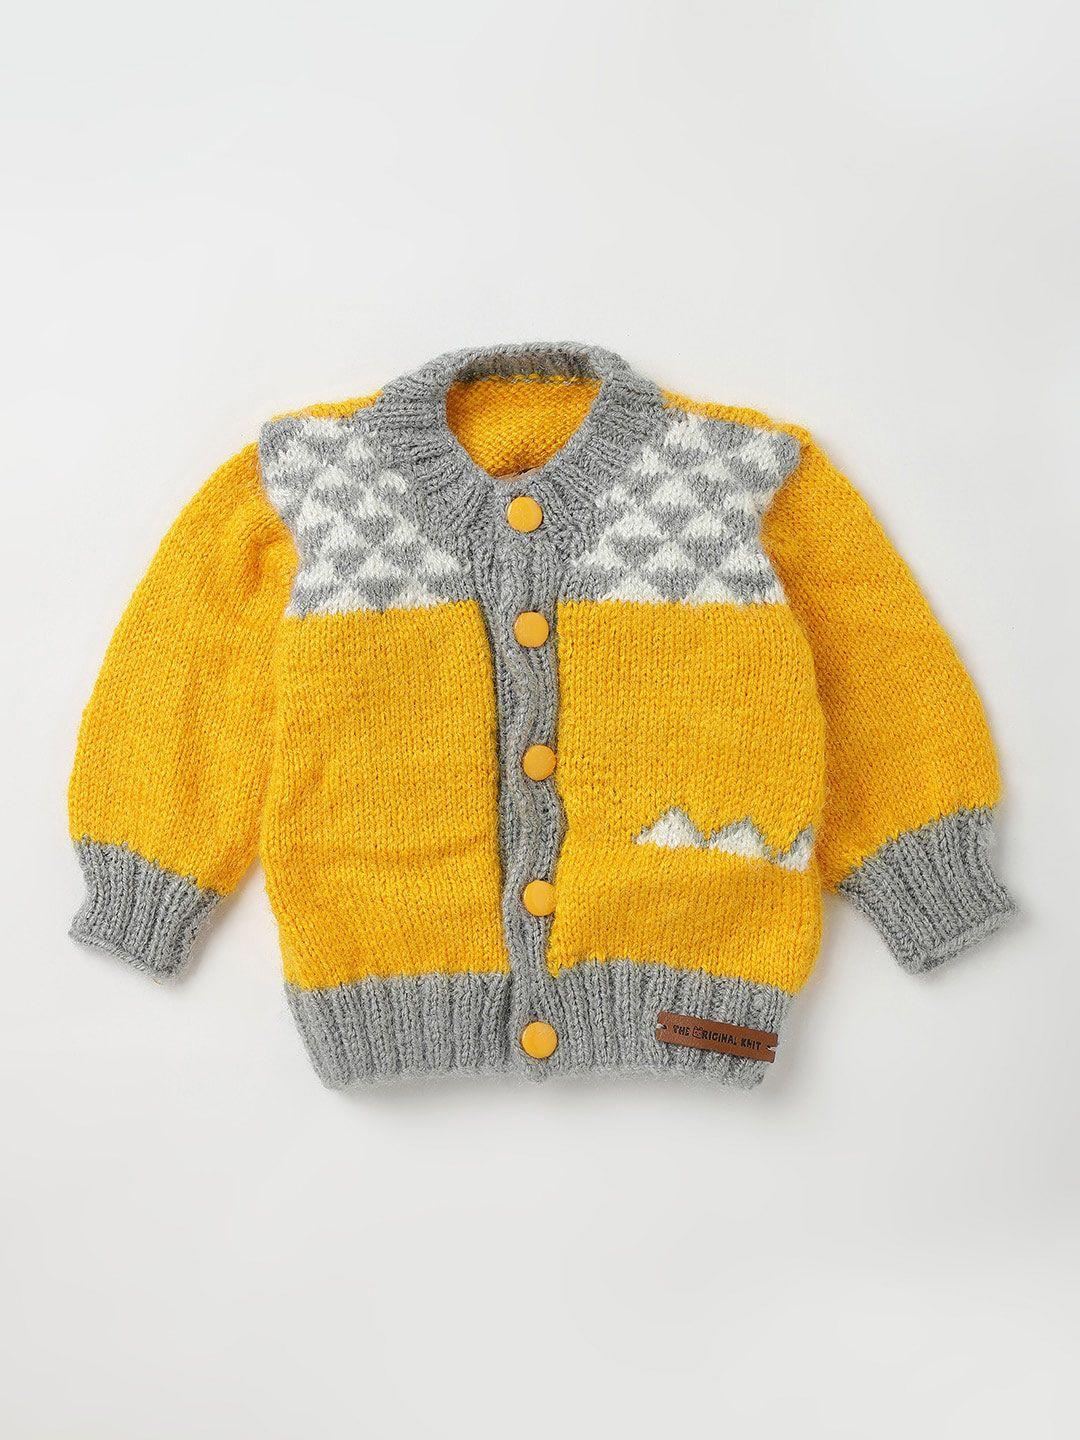 the original knit unisex kids yellow & grey cardigan